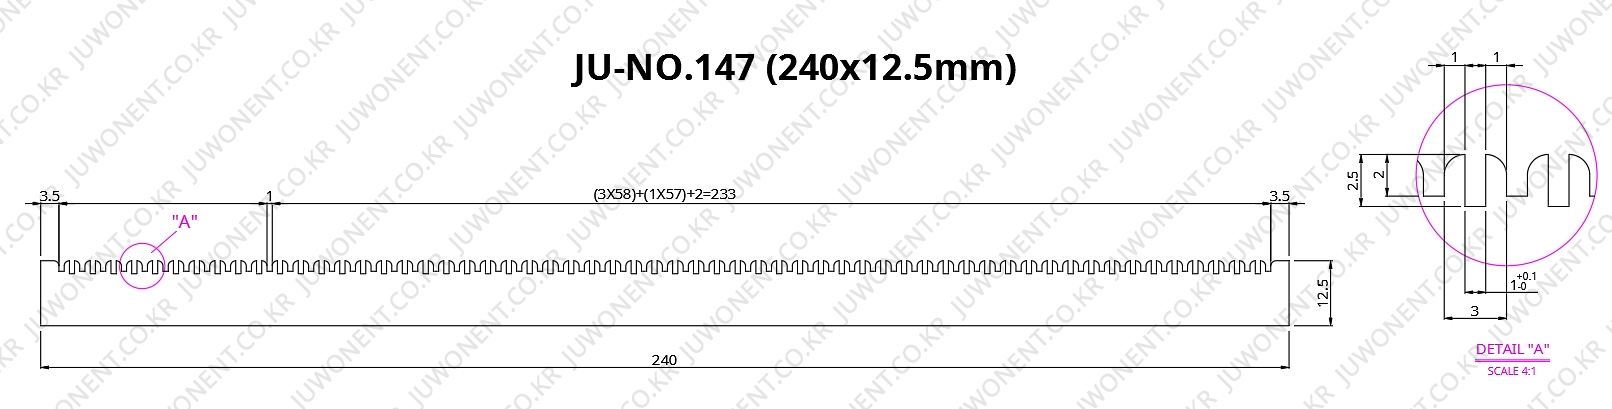 JU-NO.147 (240x12.5mm).jpg_02_renamed.jpg